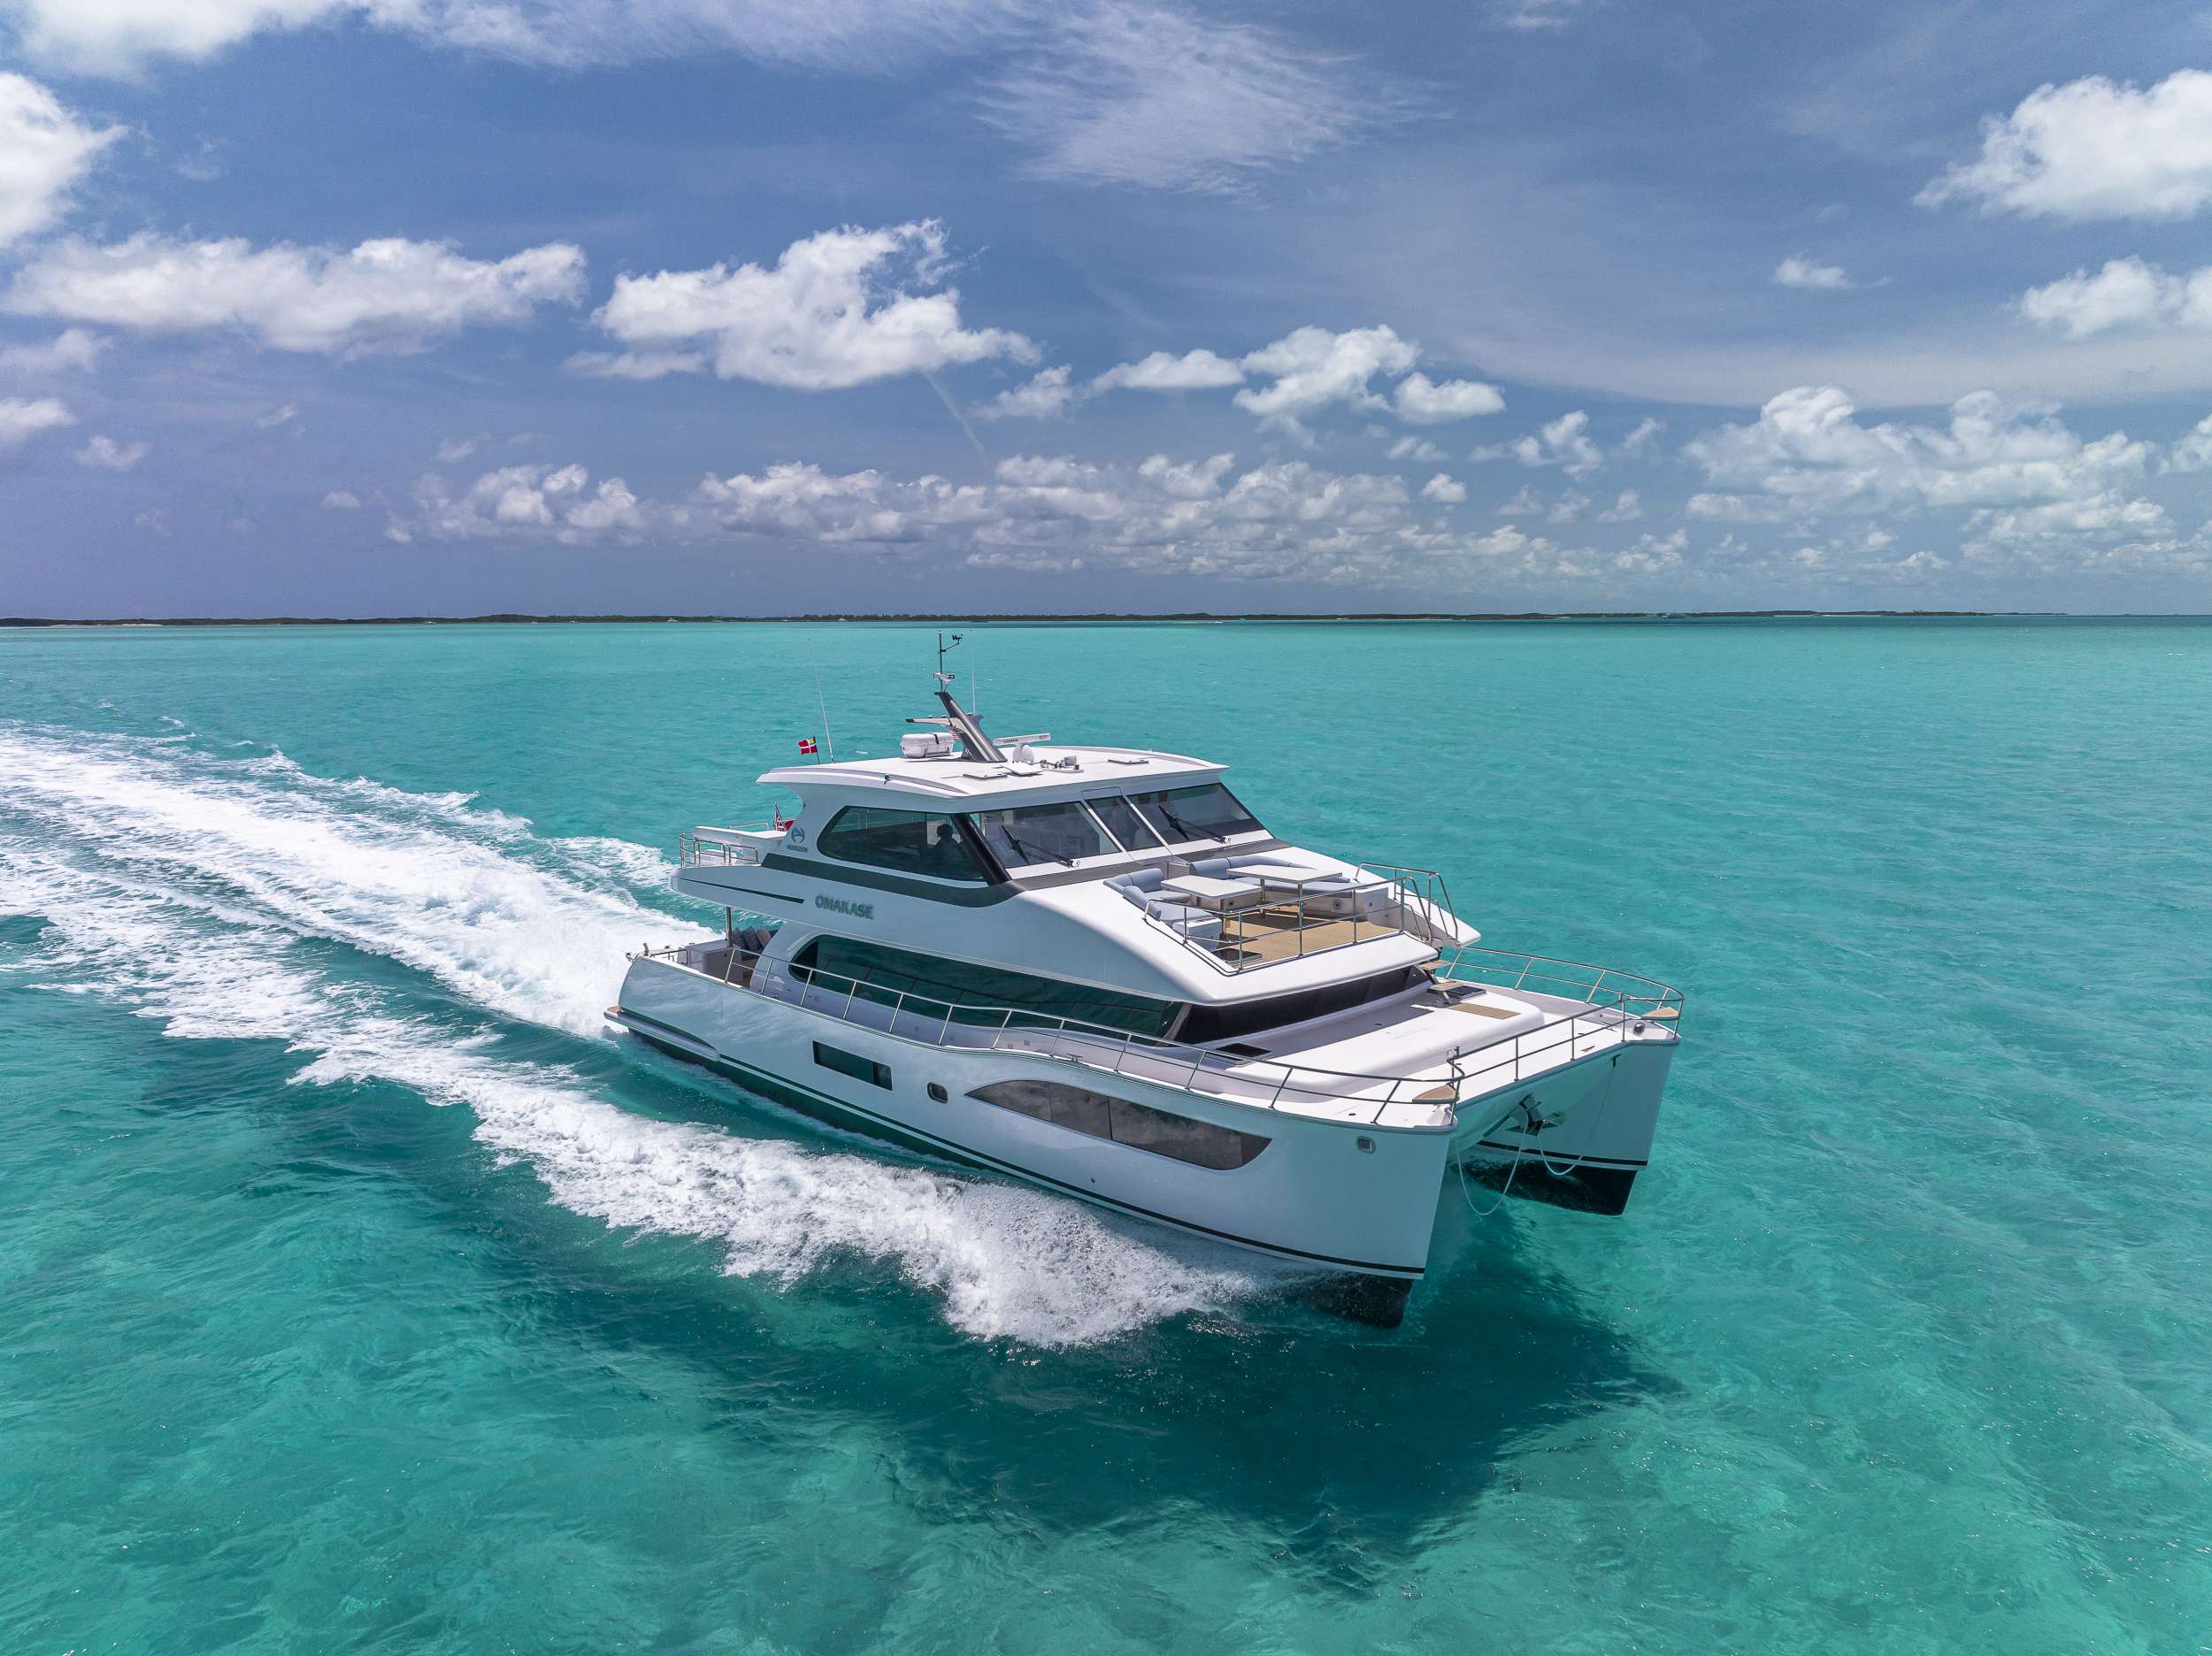 OMAKASE - Yacht Charter Nelsons Dockyard & Boat hire in Bahamas & Caribbean 1